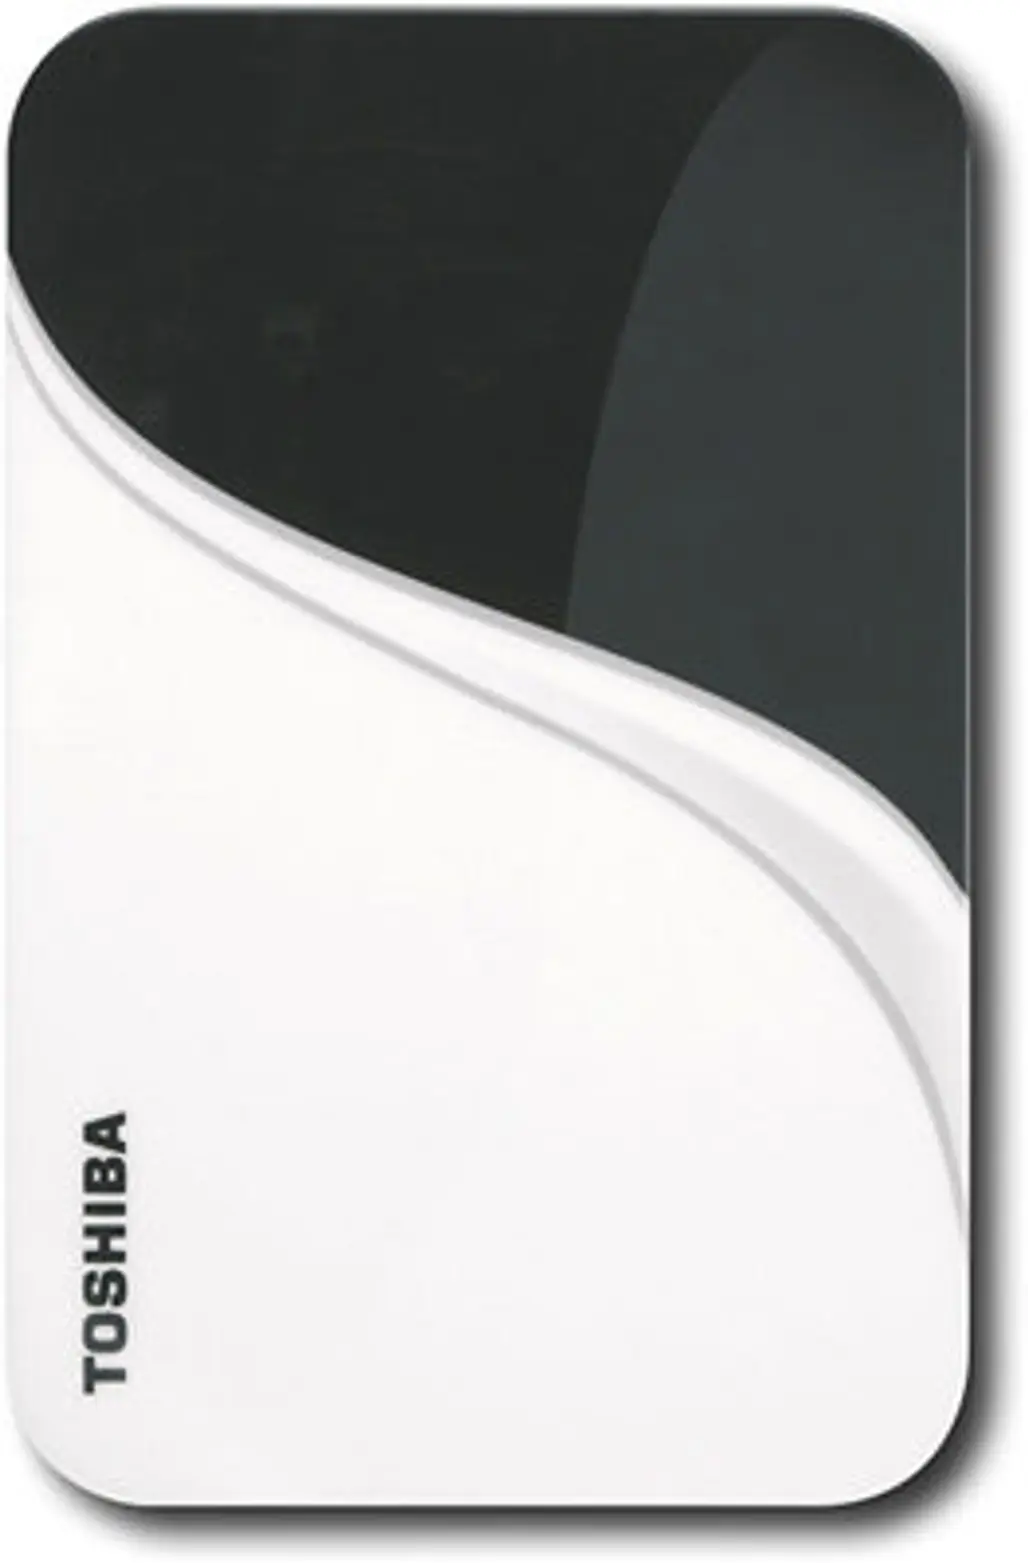 Toshiba 320GB External USB 2.0 Portable Hard Drive